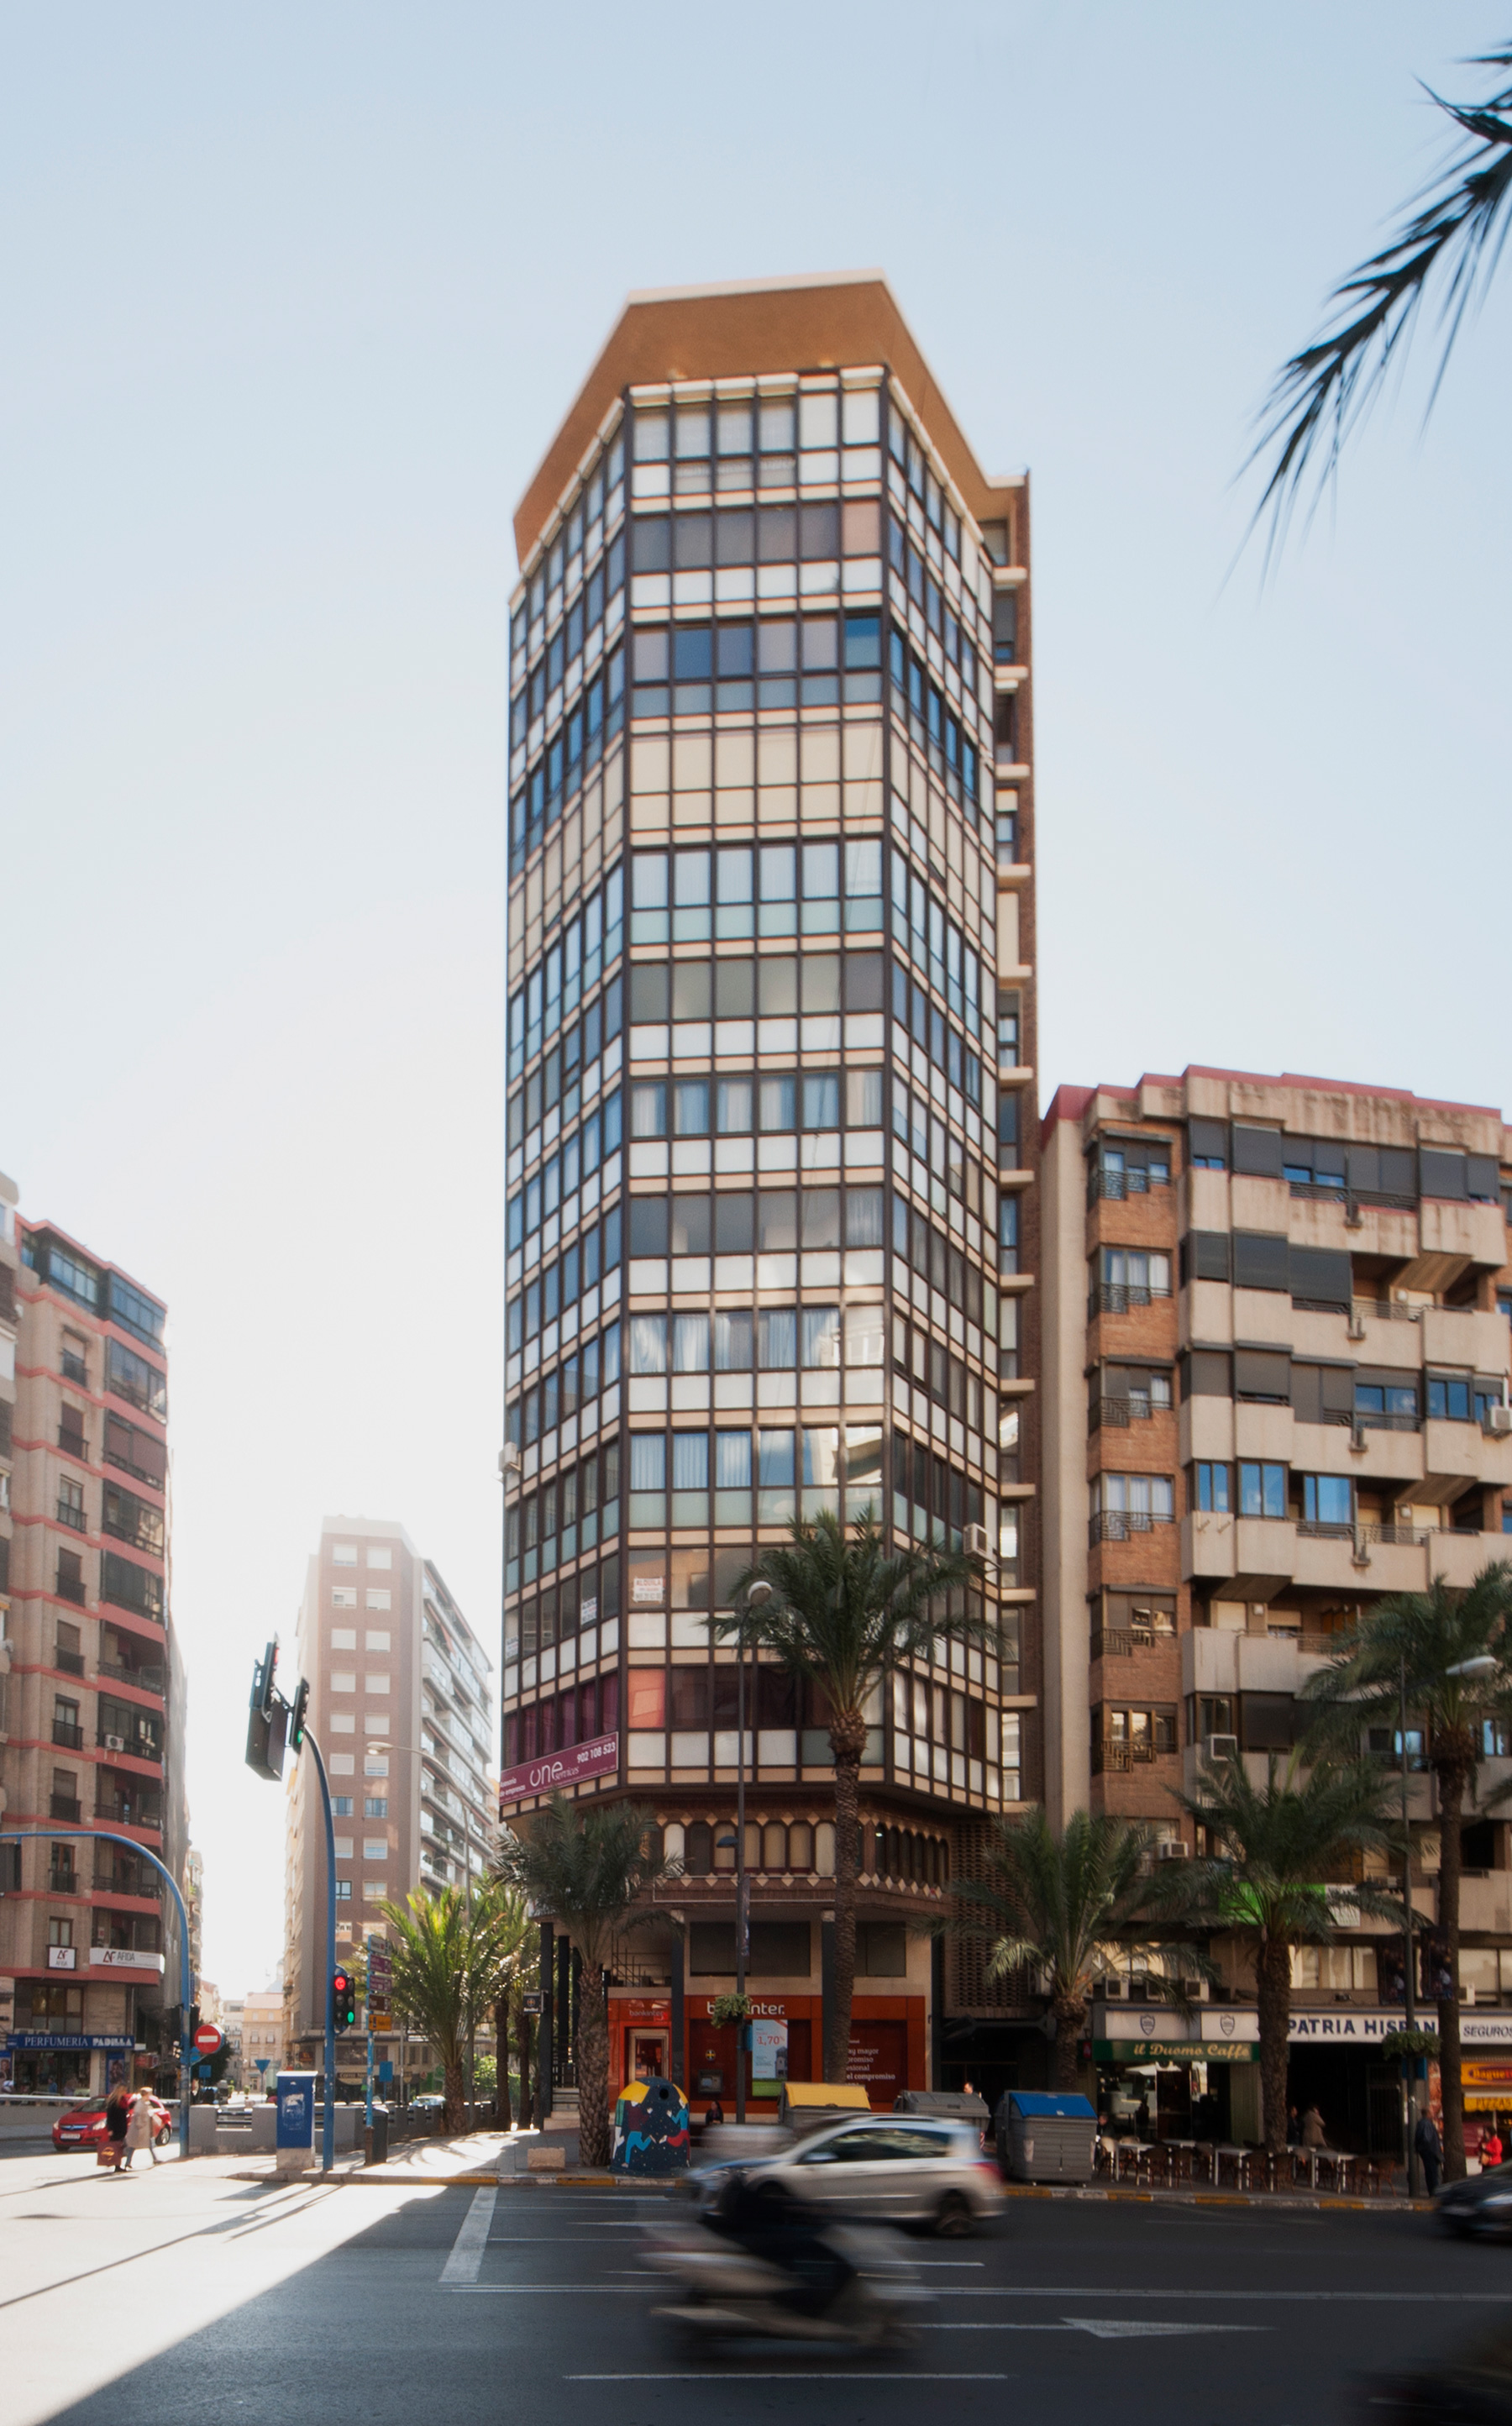 Reforma Vivienda Alfonso X el Sabio <br/> Apartment refurbishment in Alicante centre